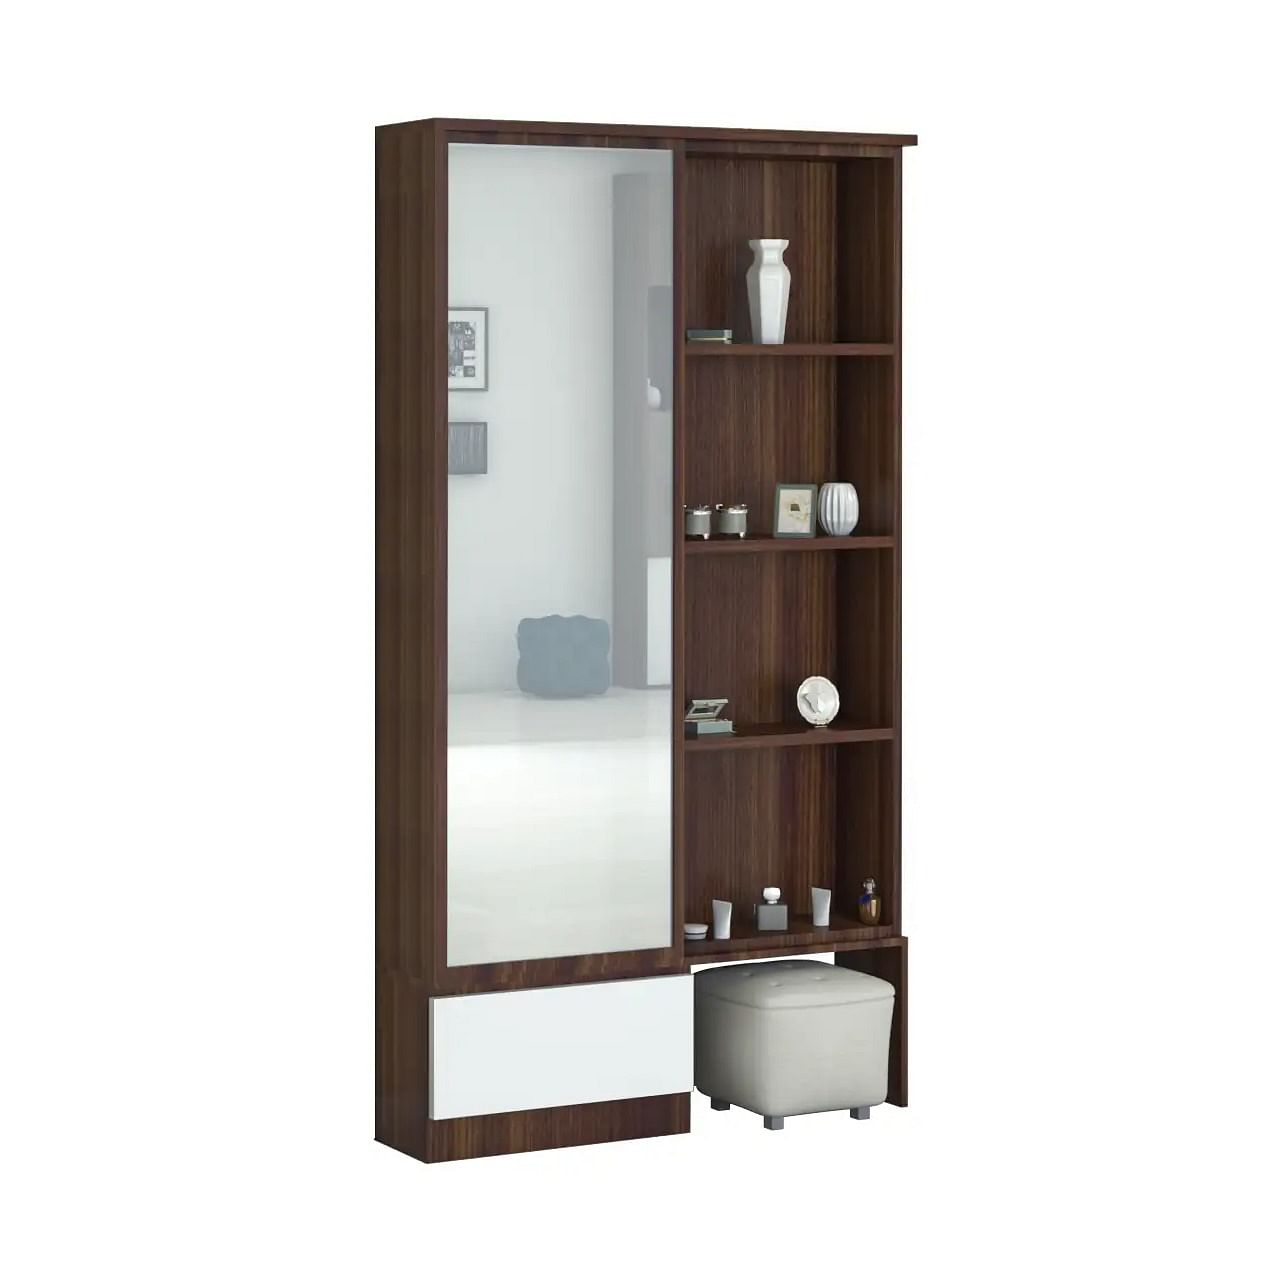 Dressing Cabinet design for Bedroom 2021 | Led Light वाला Dressing unit  design - YouTube